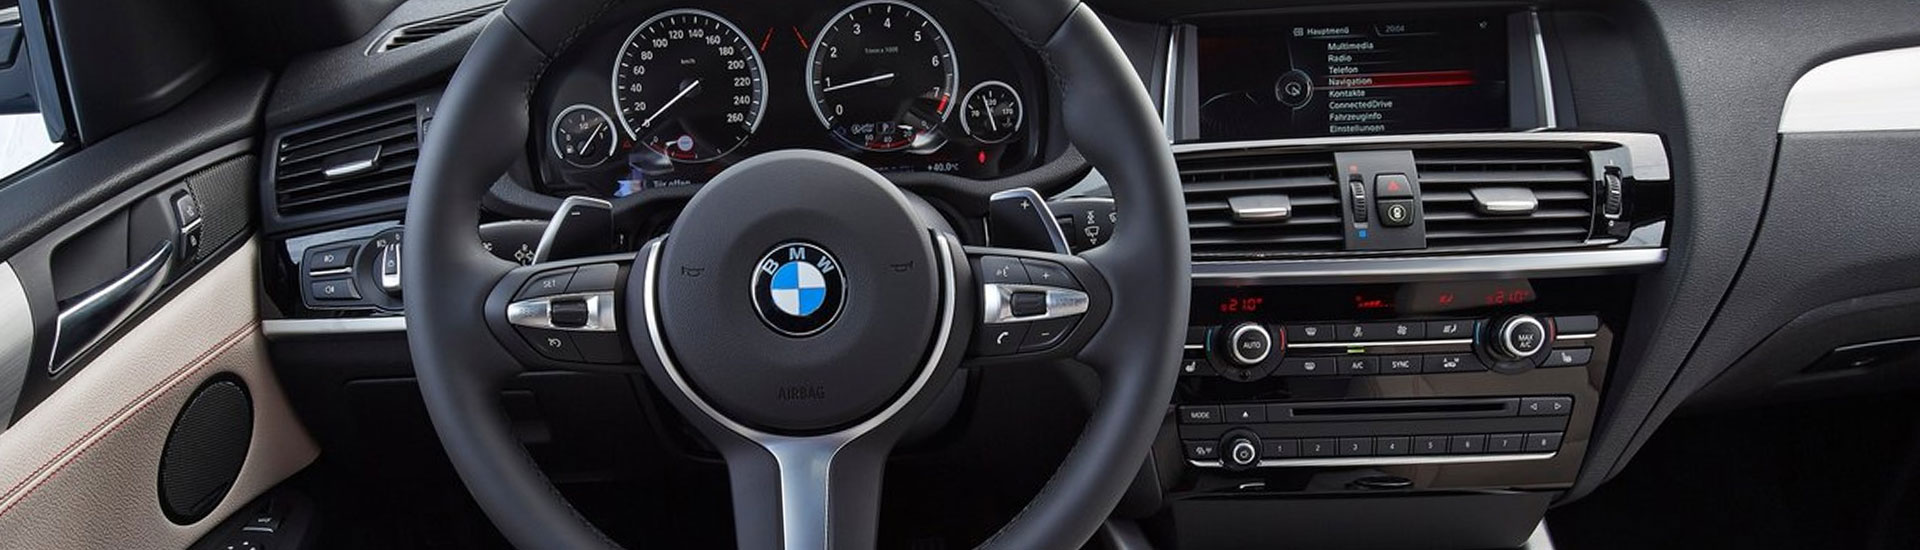 BMW X4 Custom Dash Kits